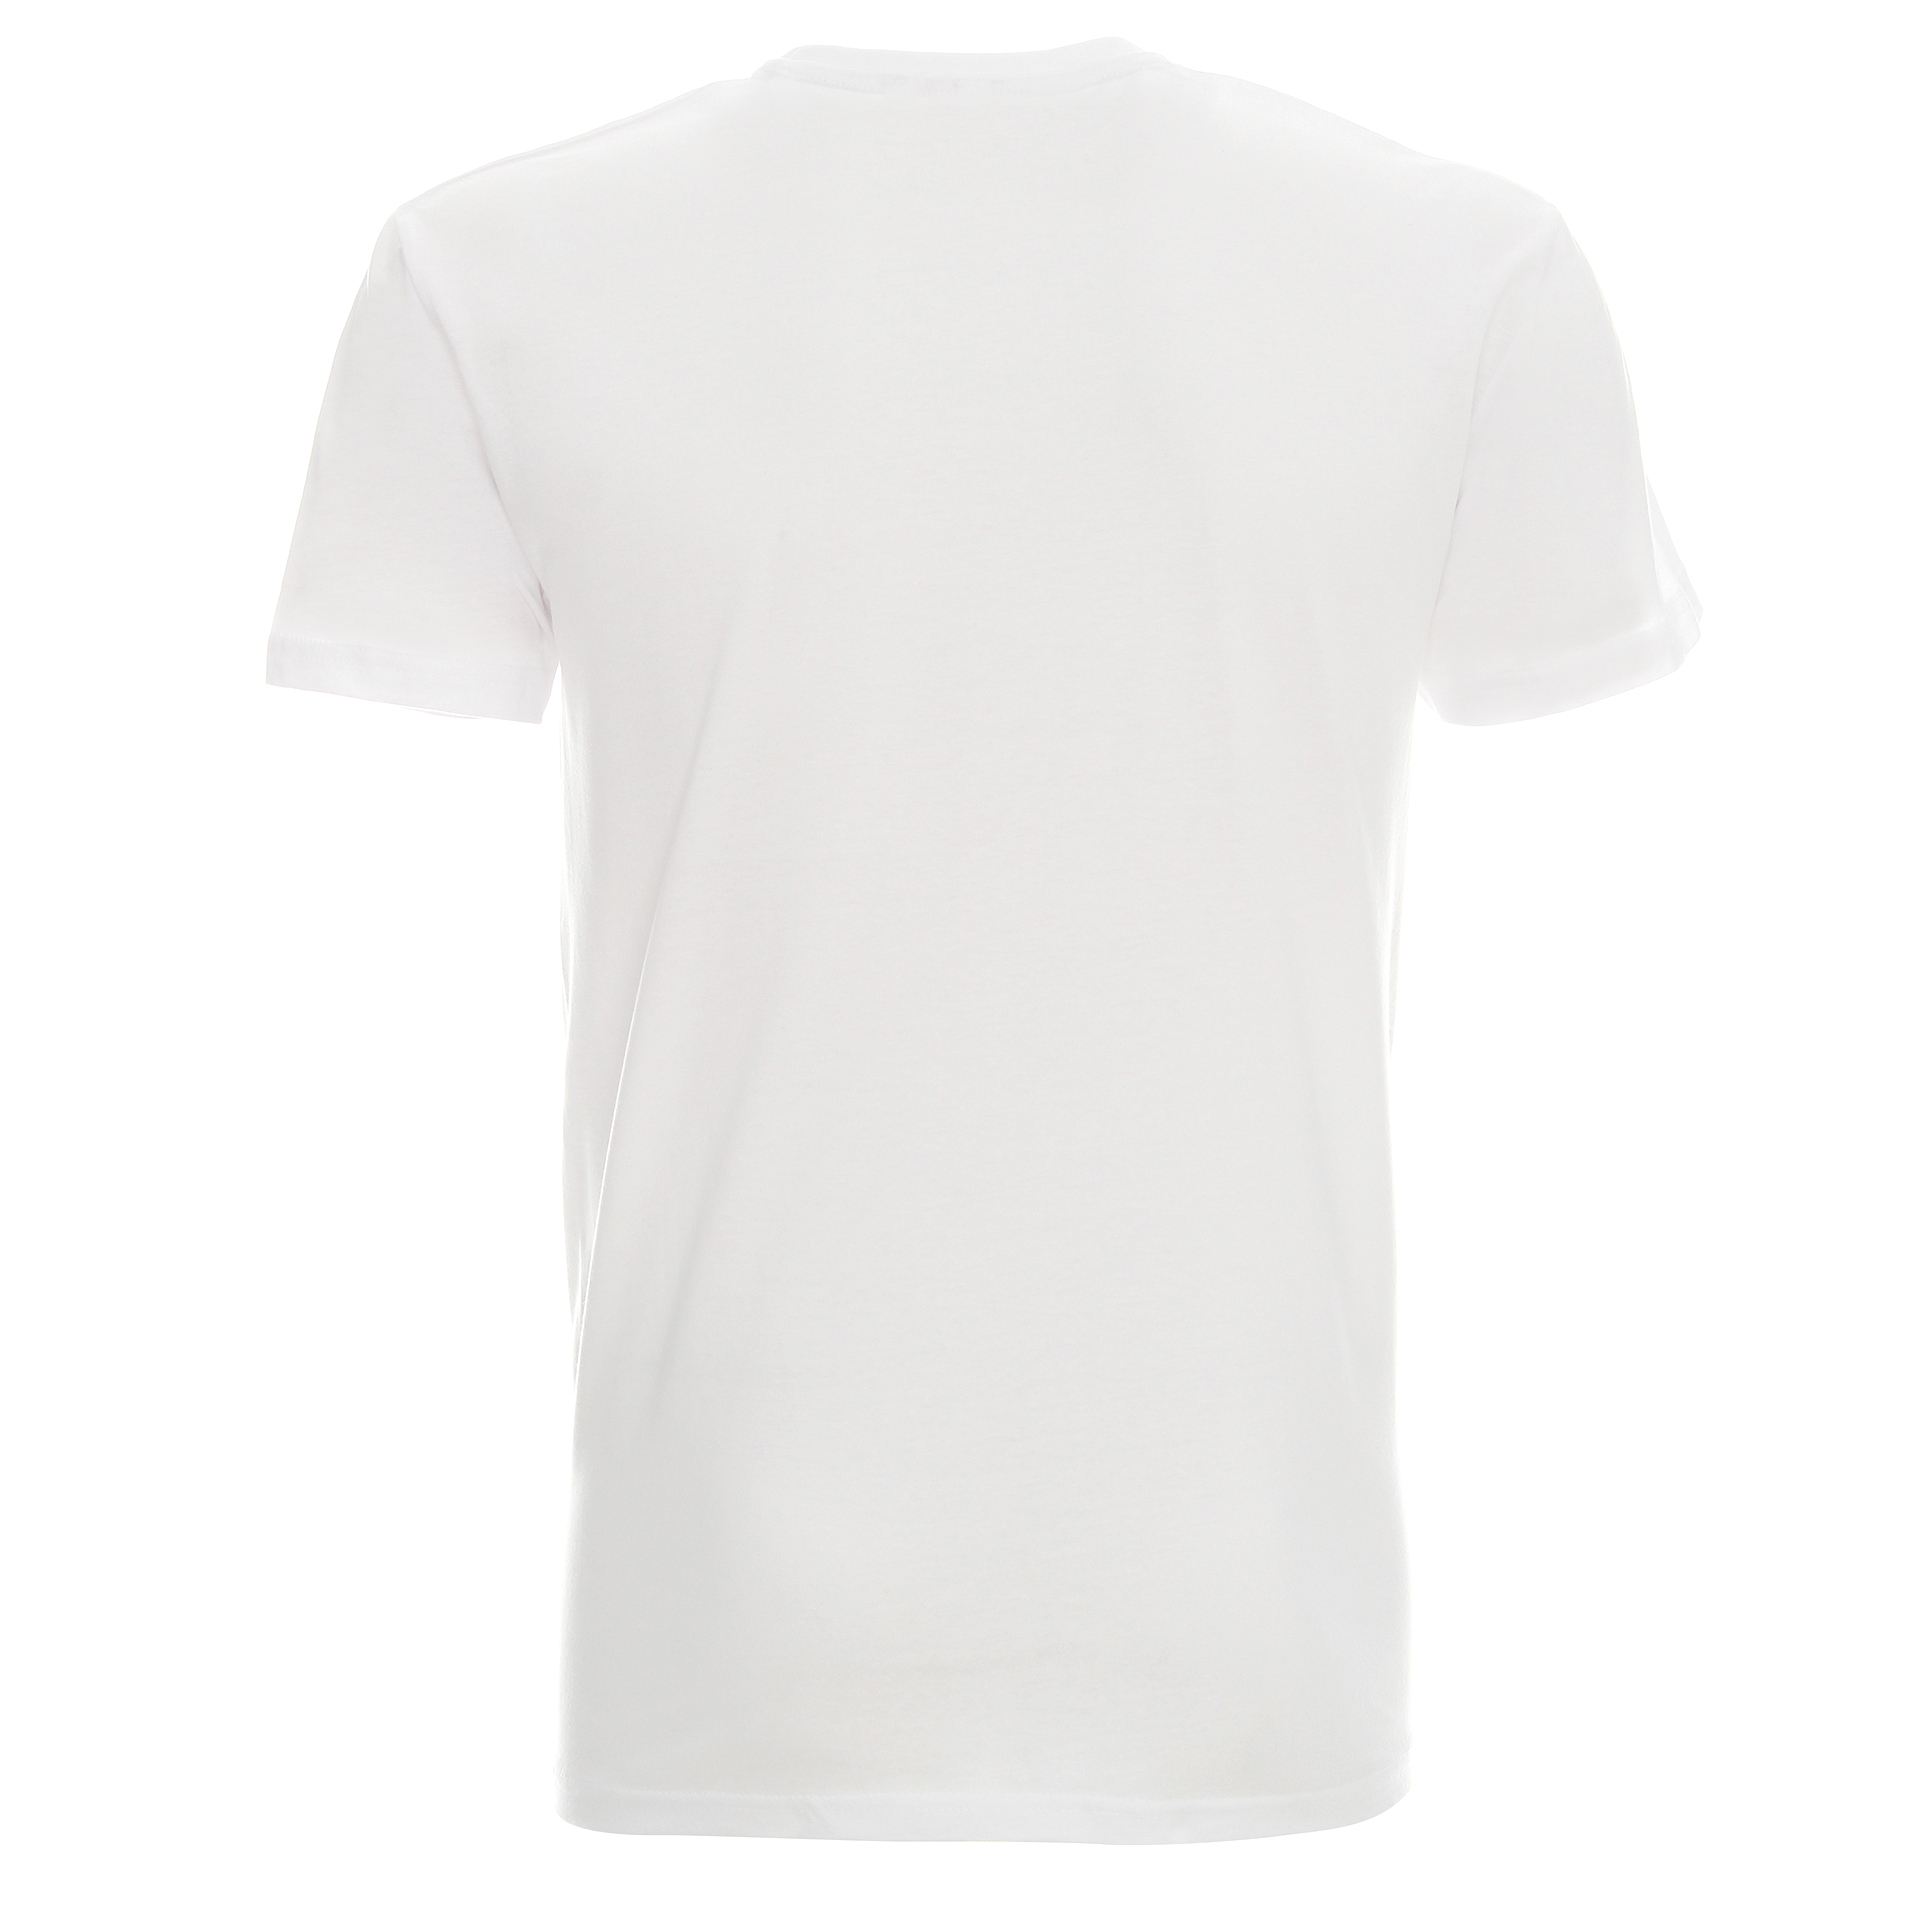 Koszulka Promostars V-Neck - biała